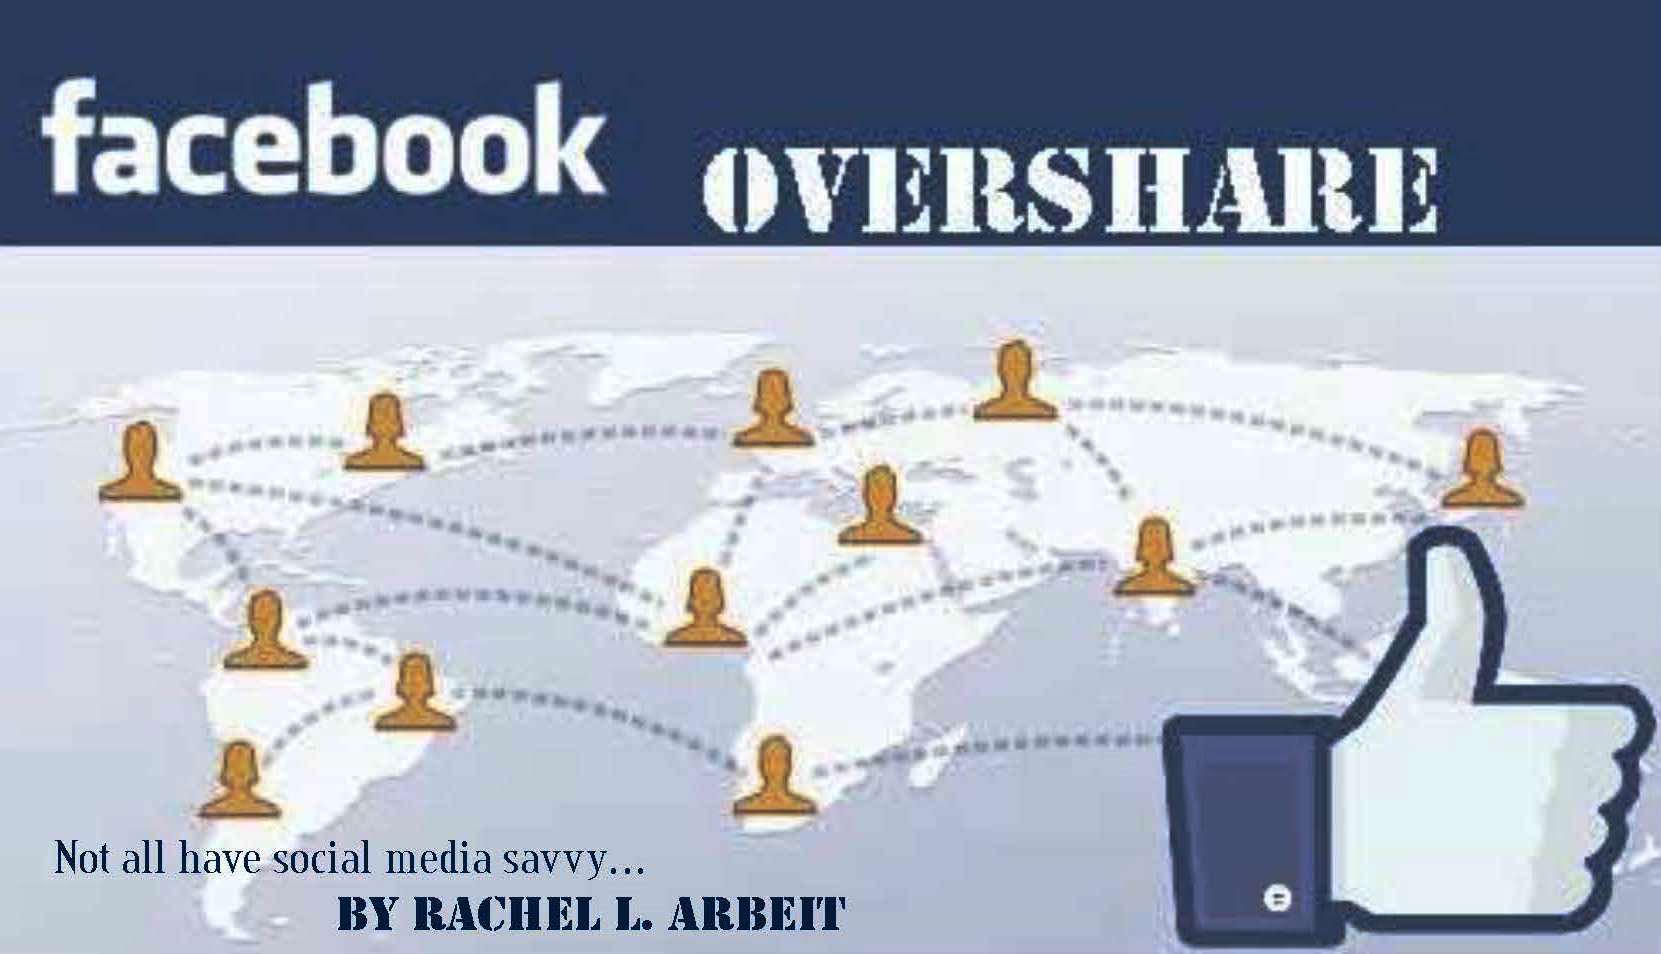 Facebook overshare